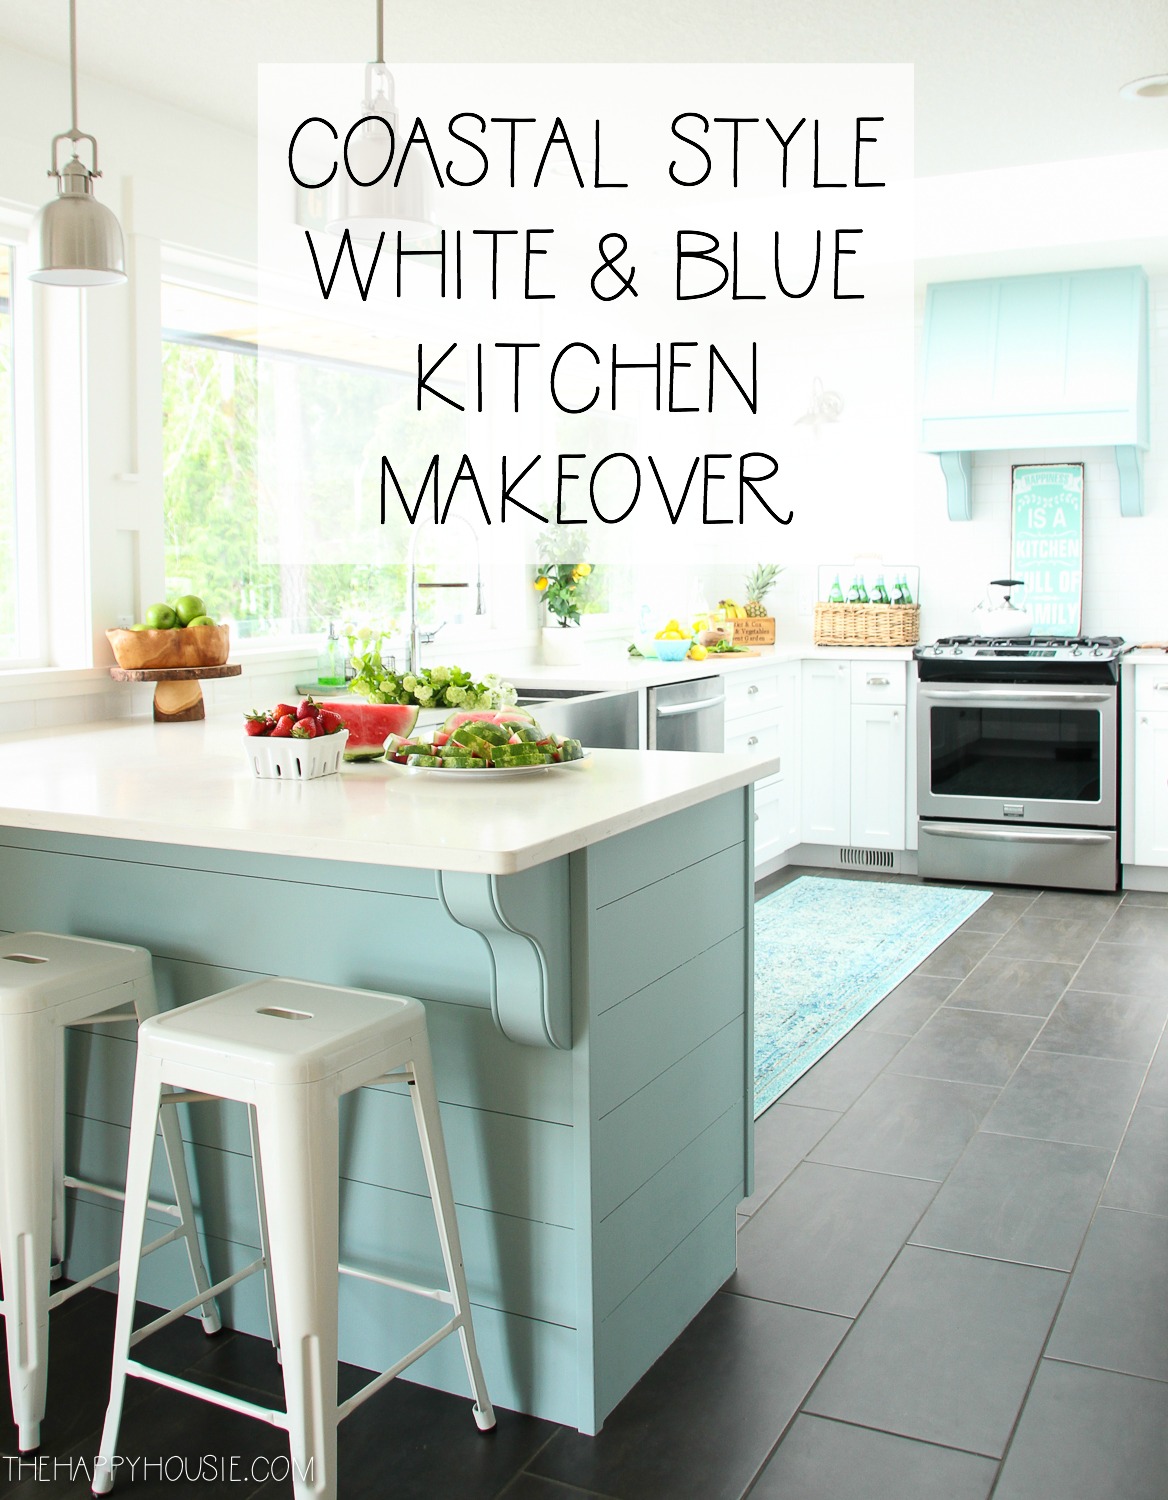 Coastal Style White & Blue Kitchen Makeover graphic.